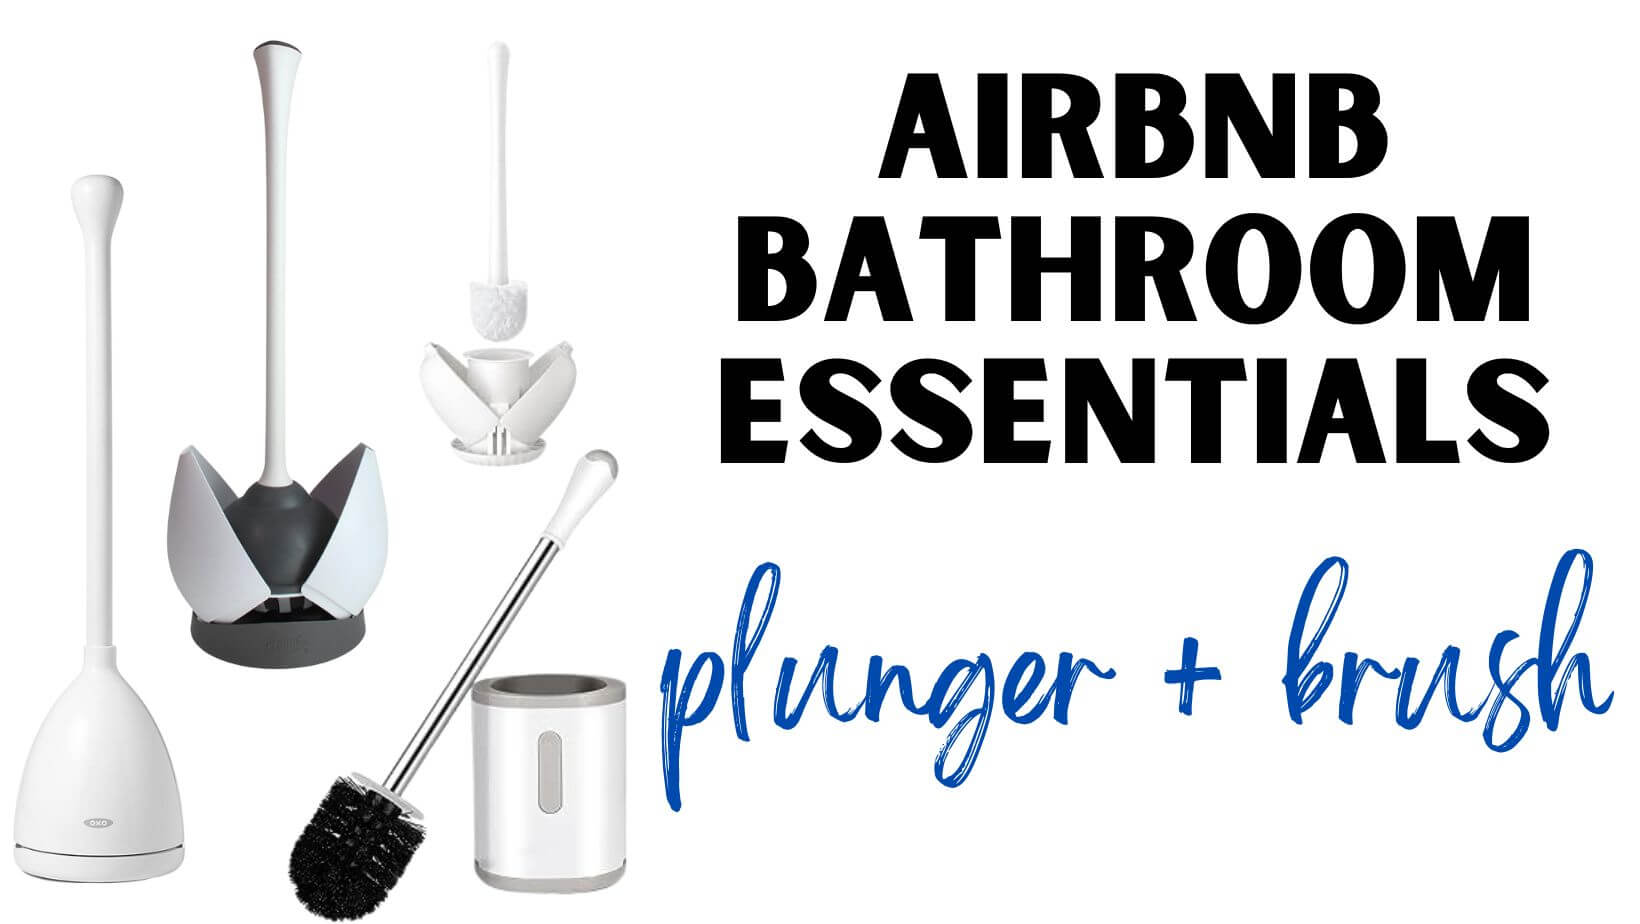 Airbnb Bathroom Essentials Plunger and Toilet Brush